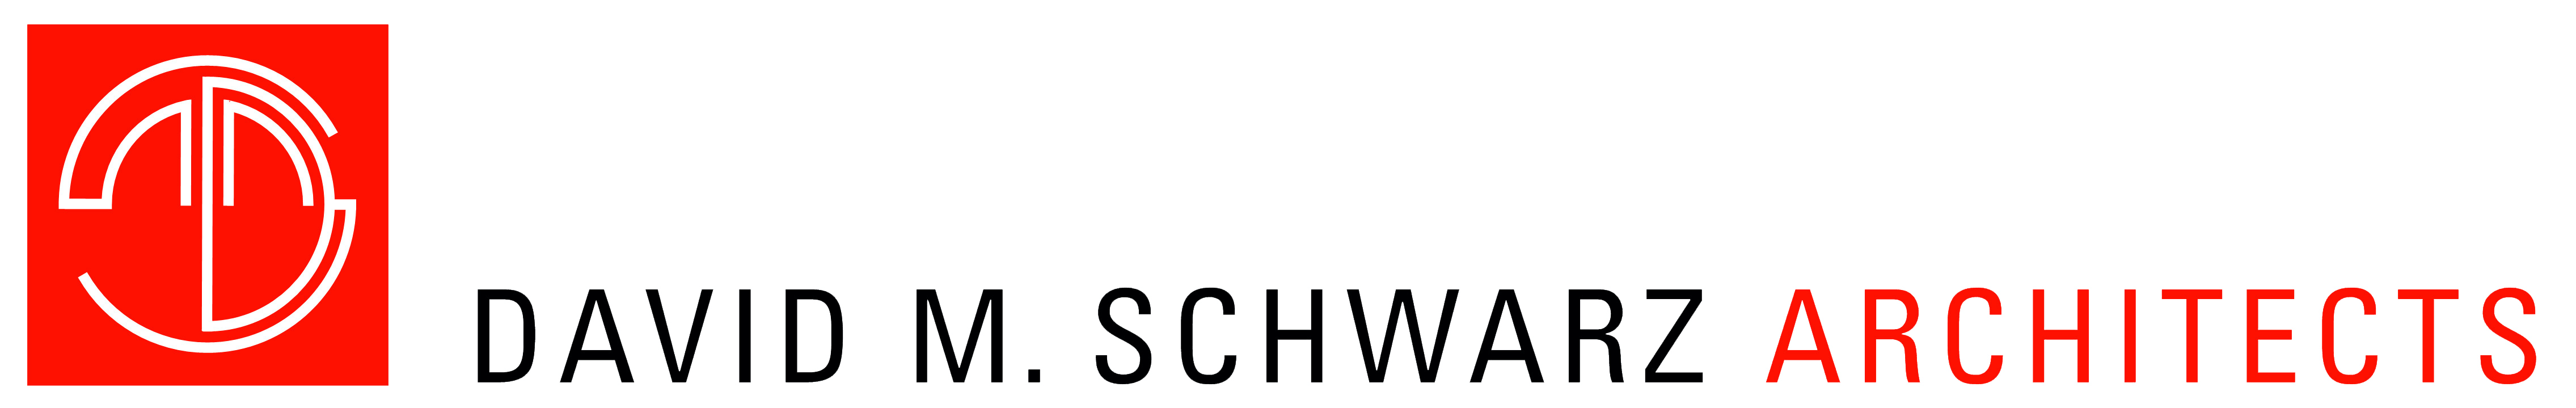 David M Schwarz Architects logo